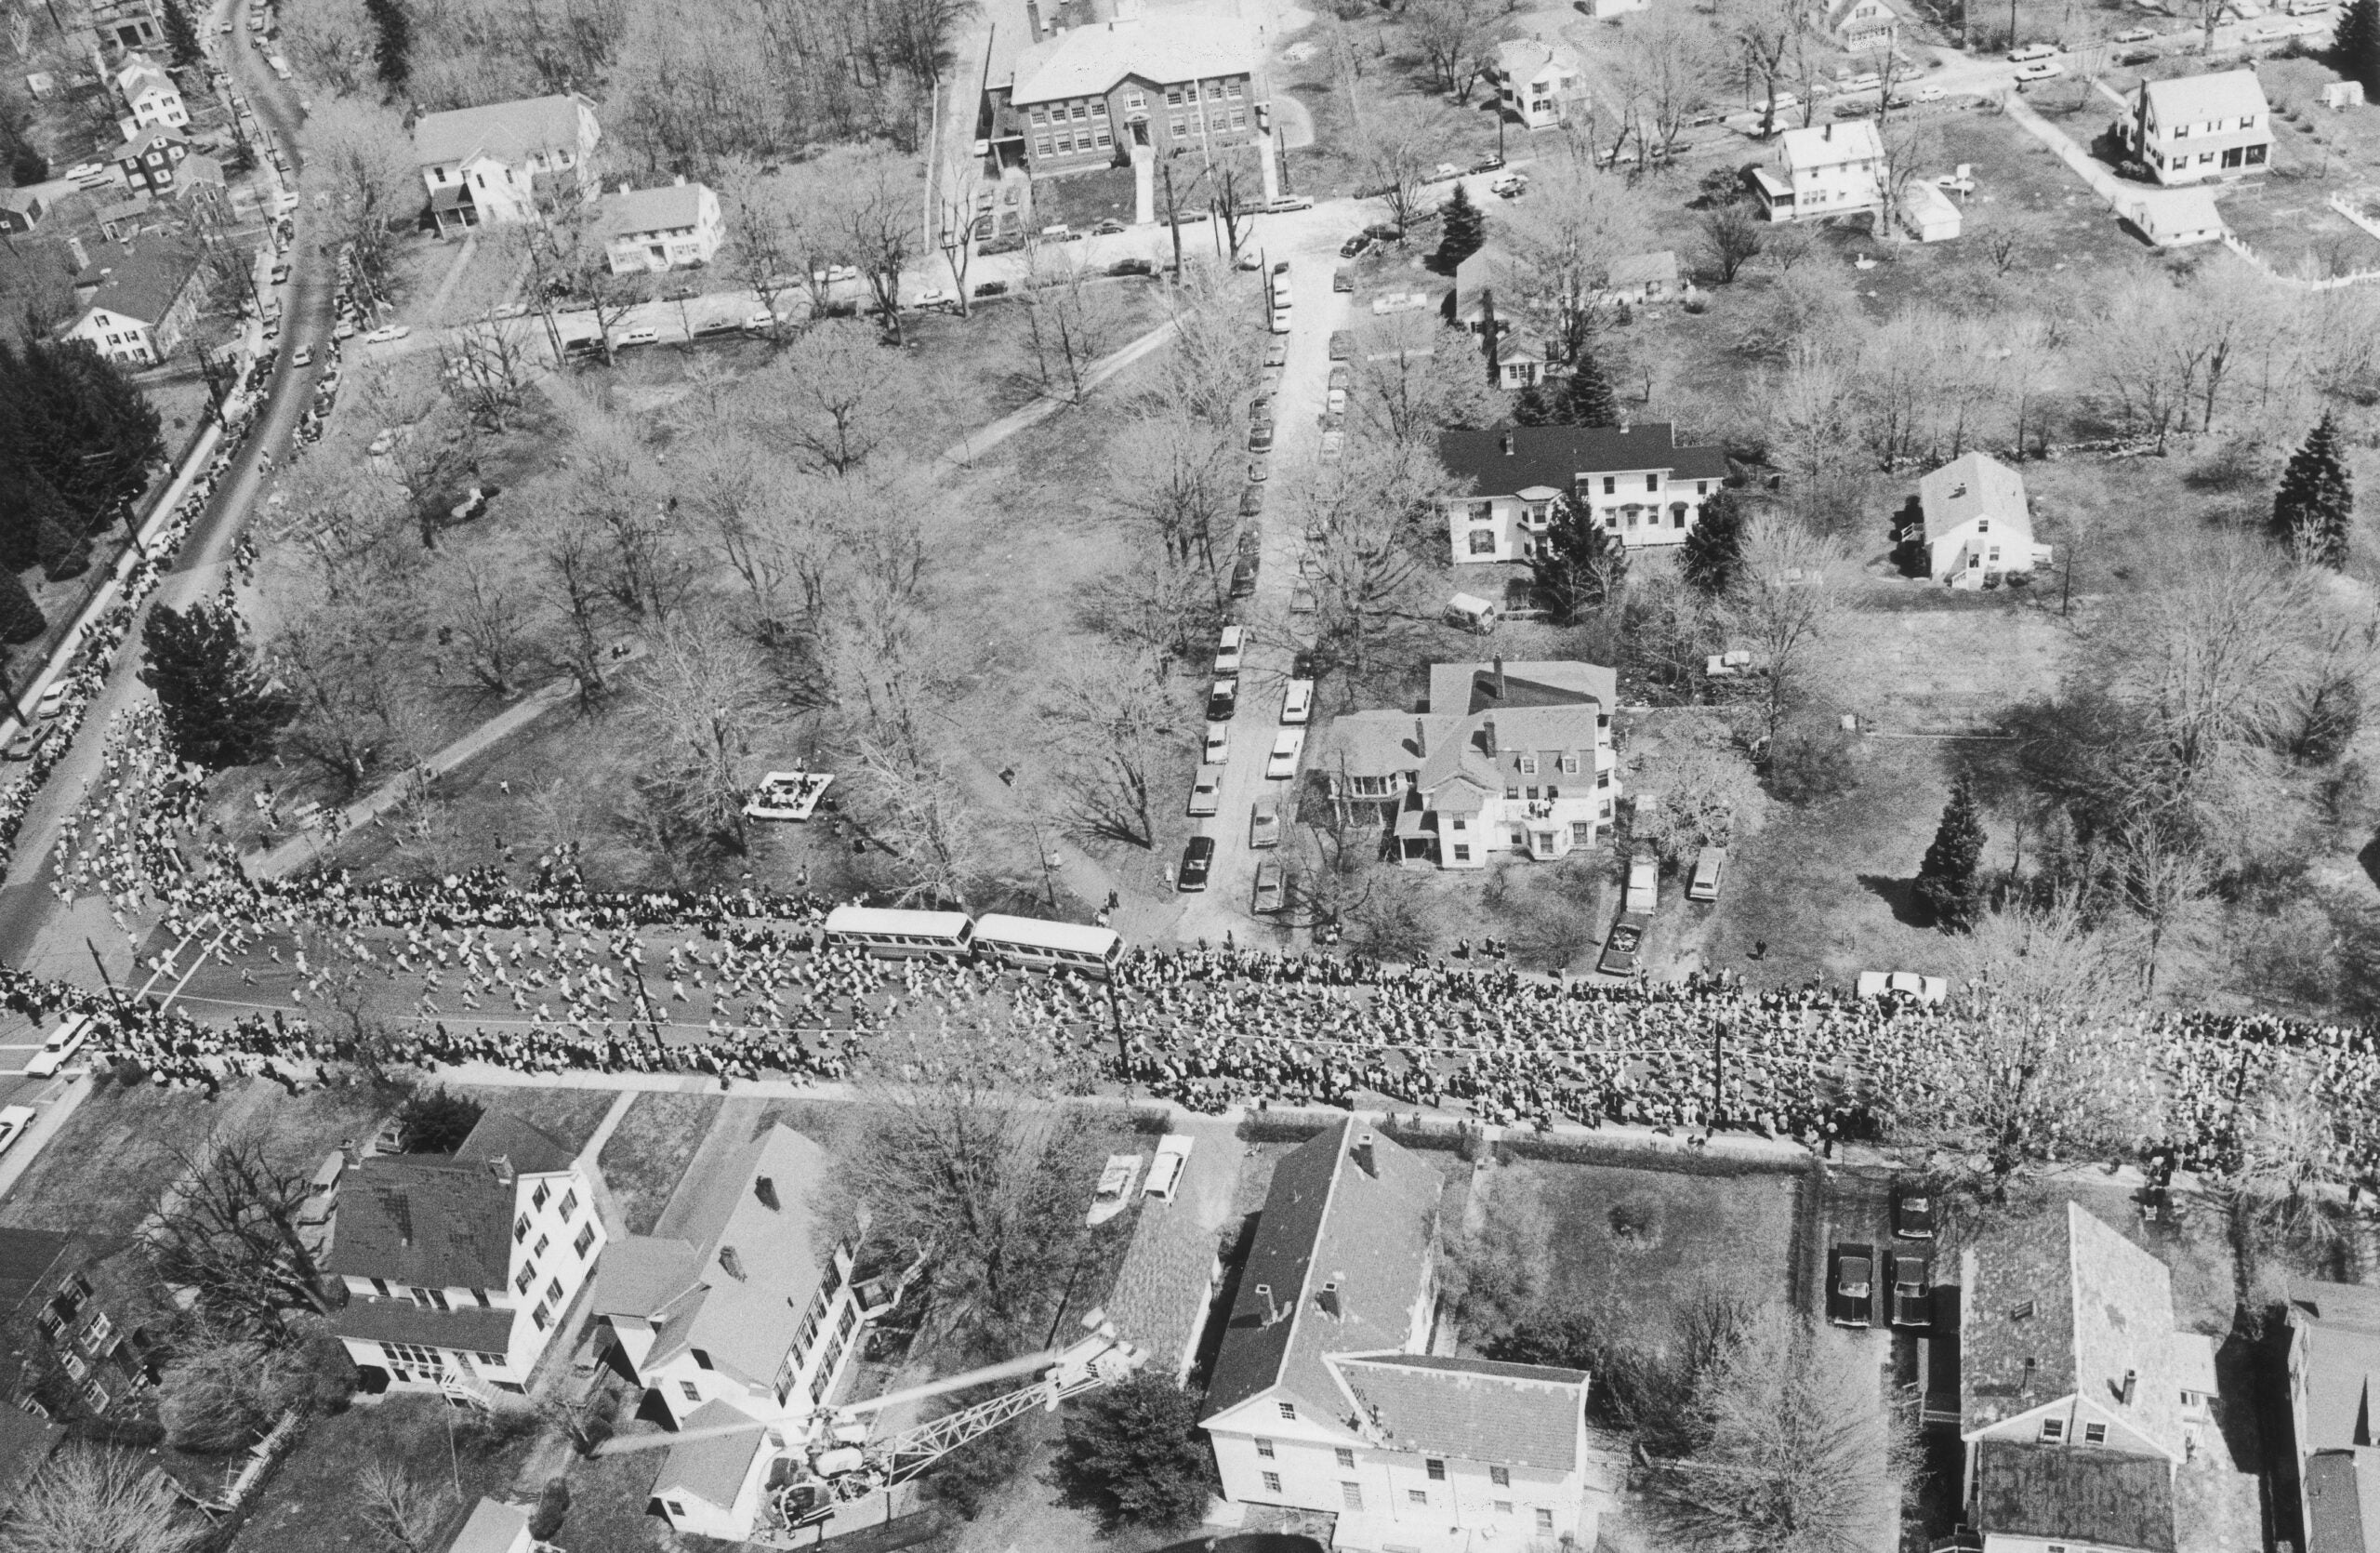 1968 Boston Marathon